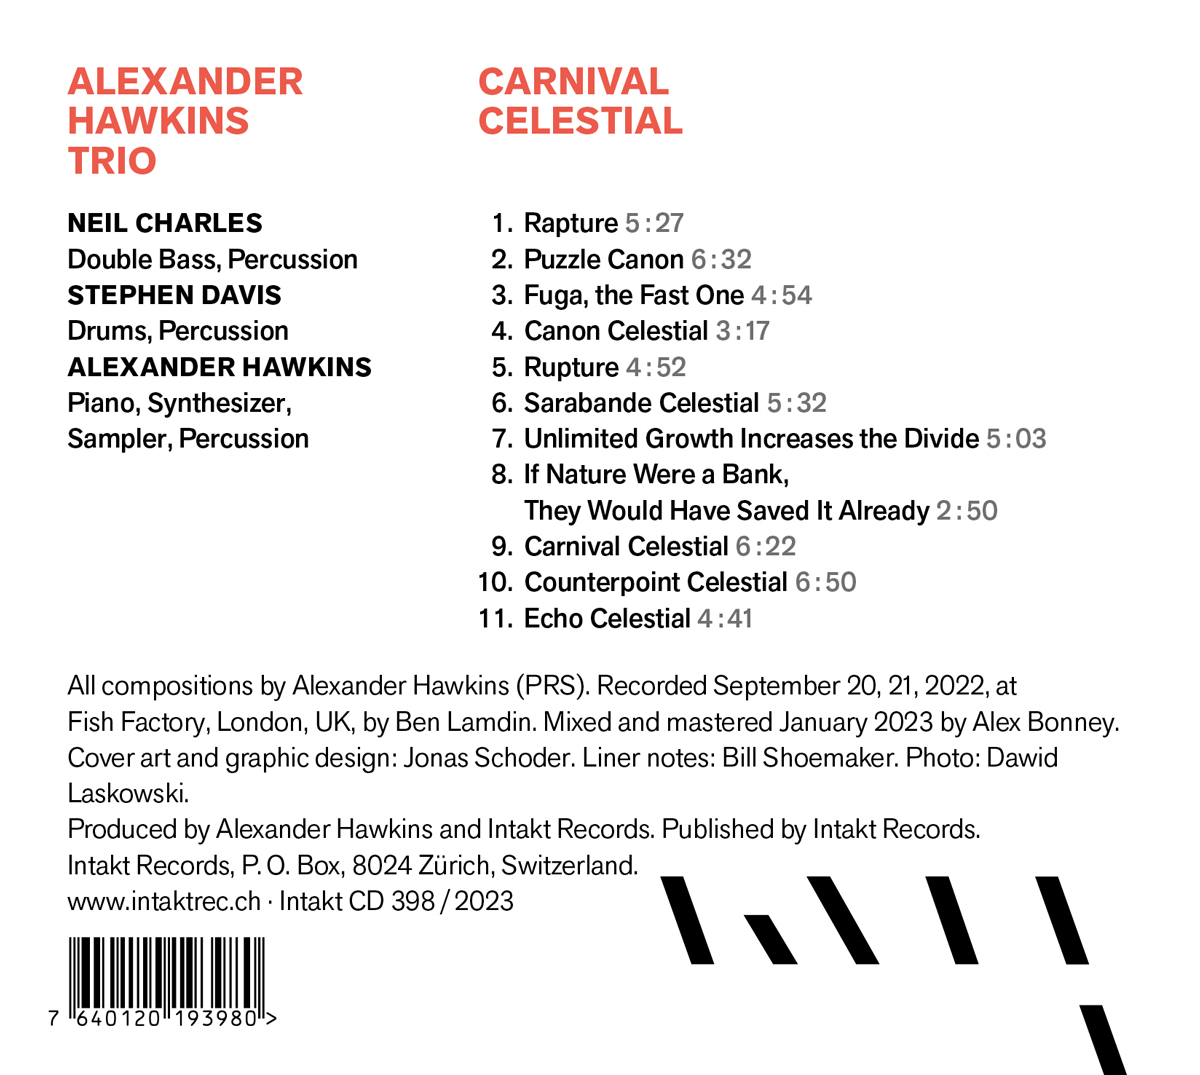 ALEXANDER HAWKINS TRIO WITH NEIL CHARLES AND STEPHEN DAVIS: CARNIVAL CELESTIAL. Intakt CD 398